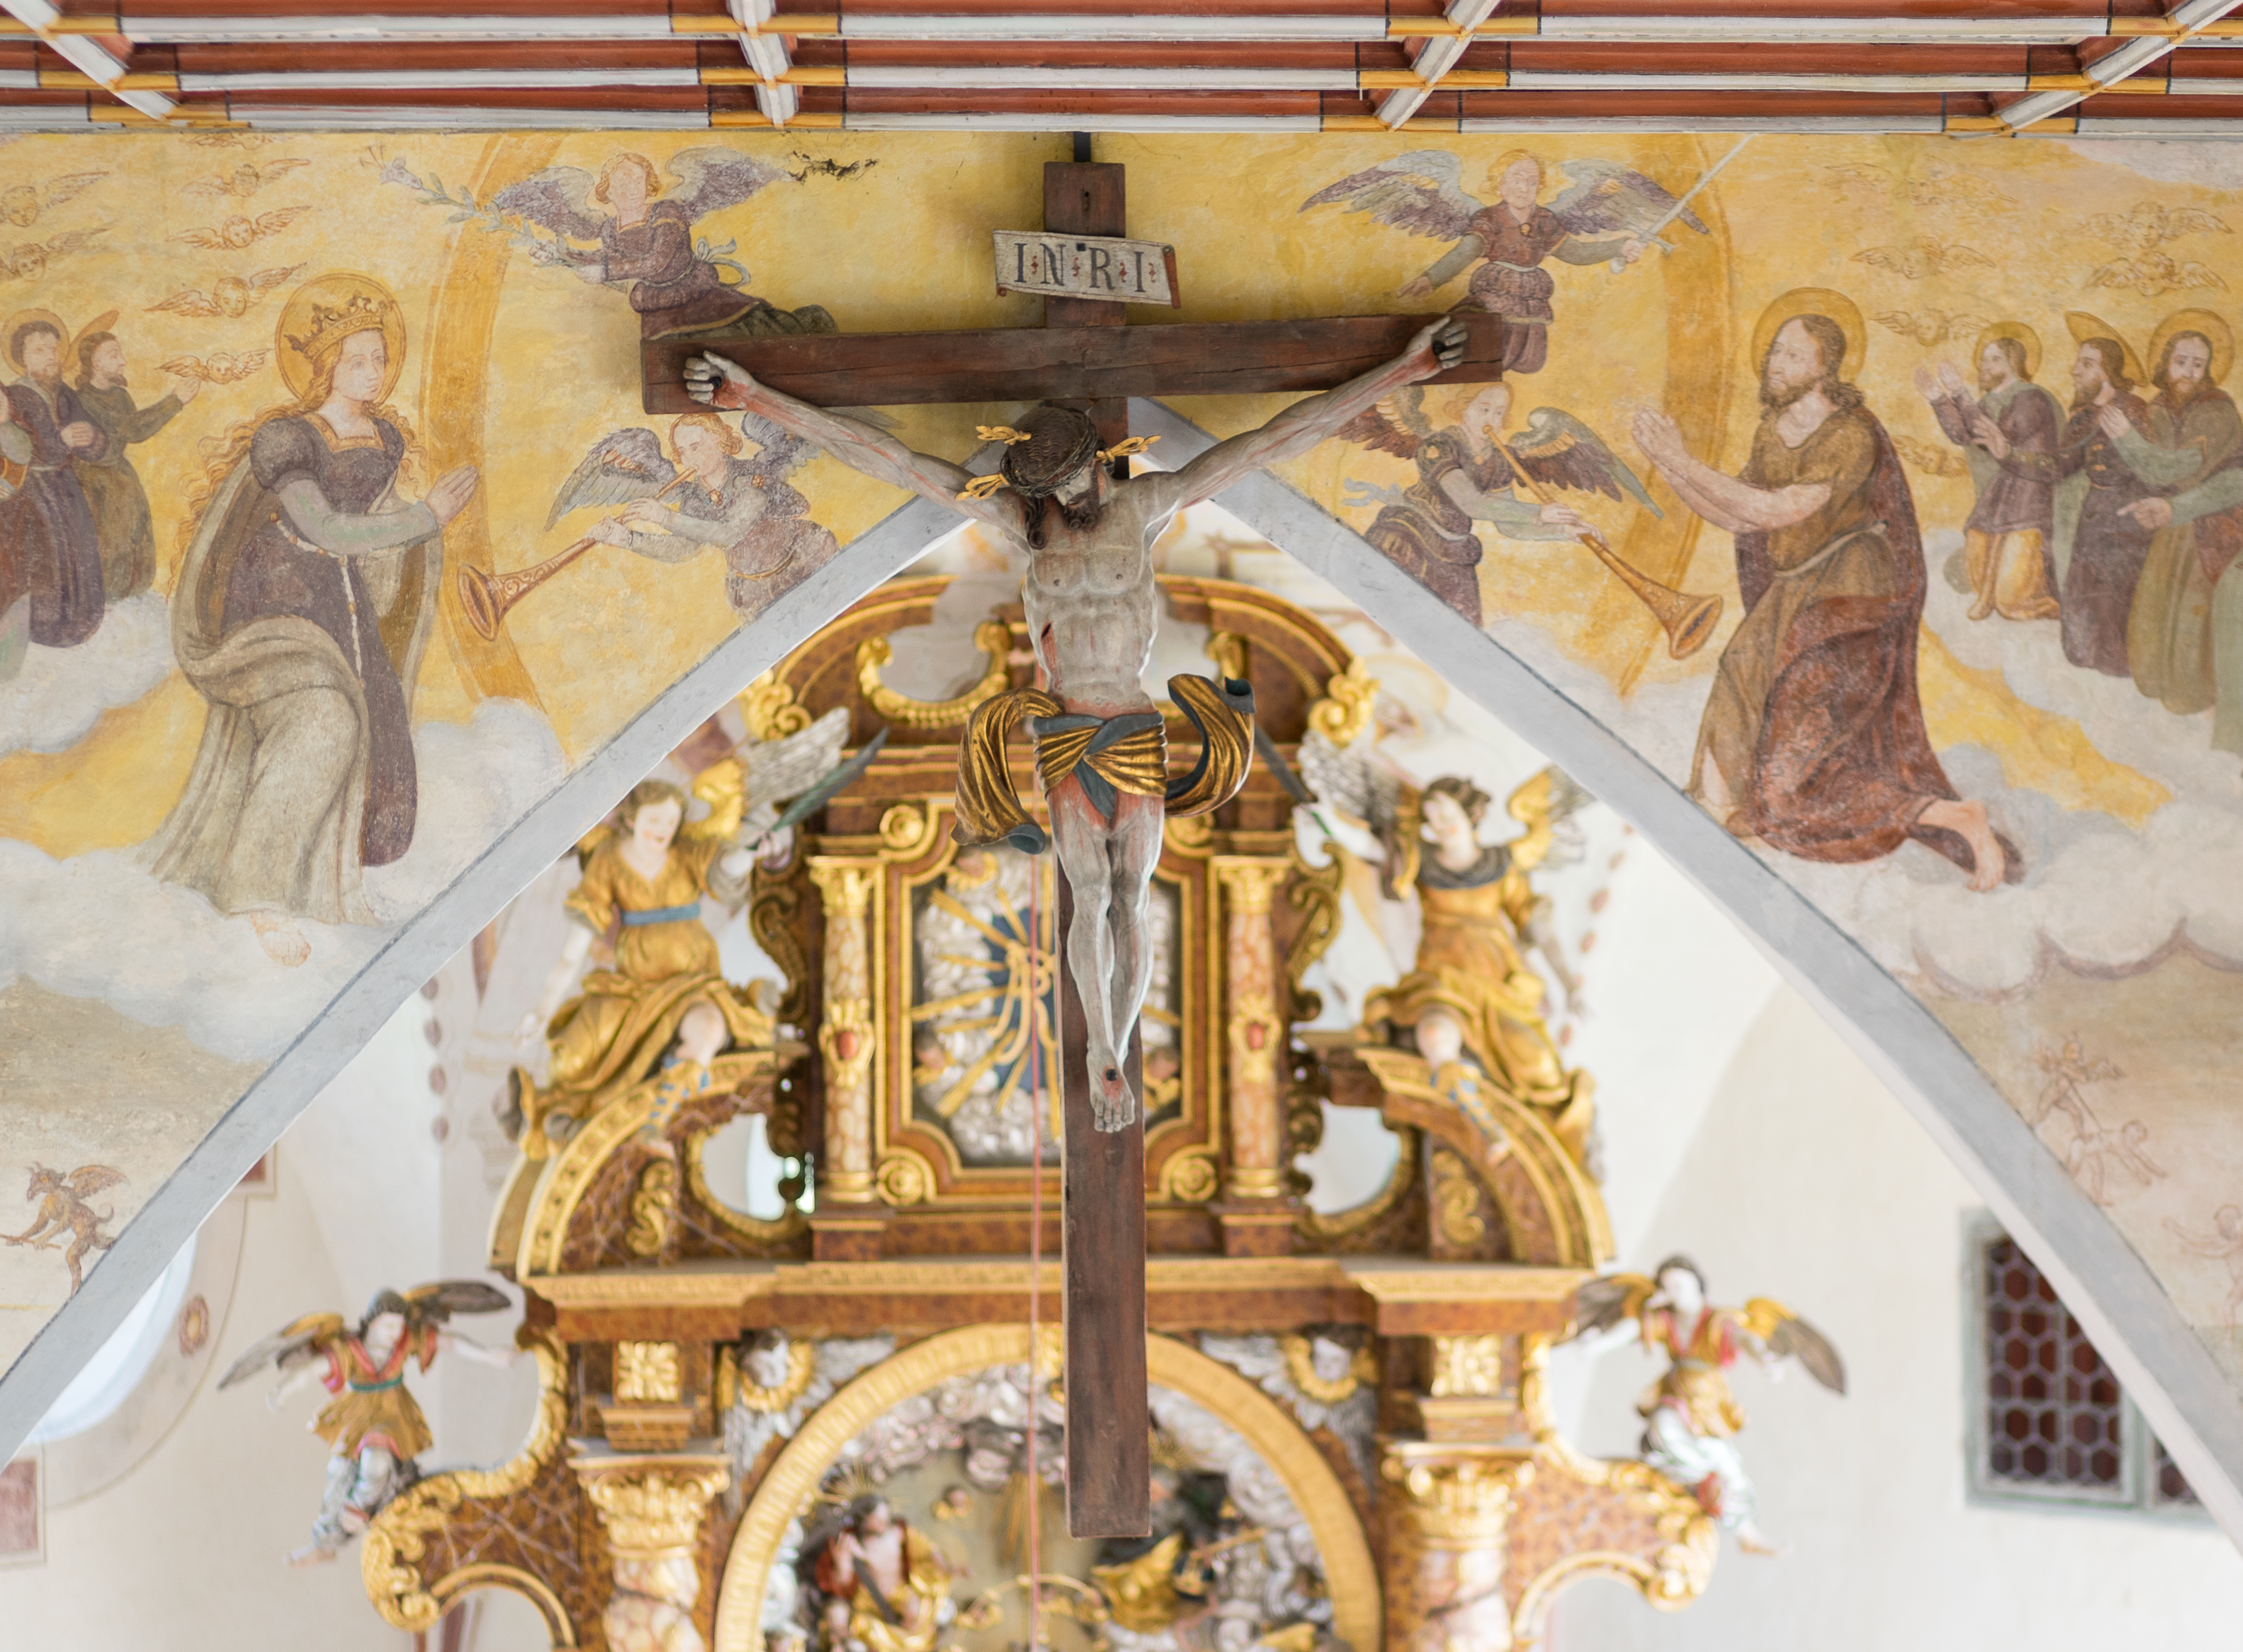 St. Simon und Judas Thaddäus (Holzgünz) - cross hanging from the ceiling